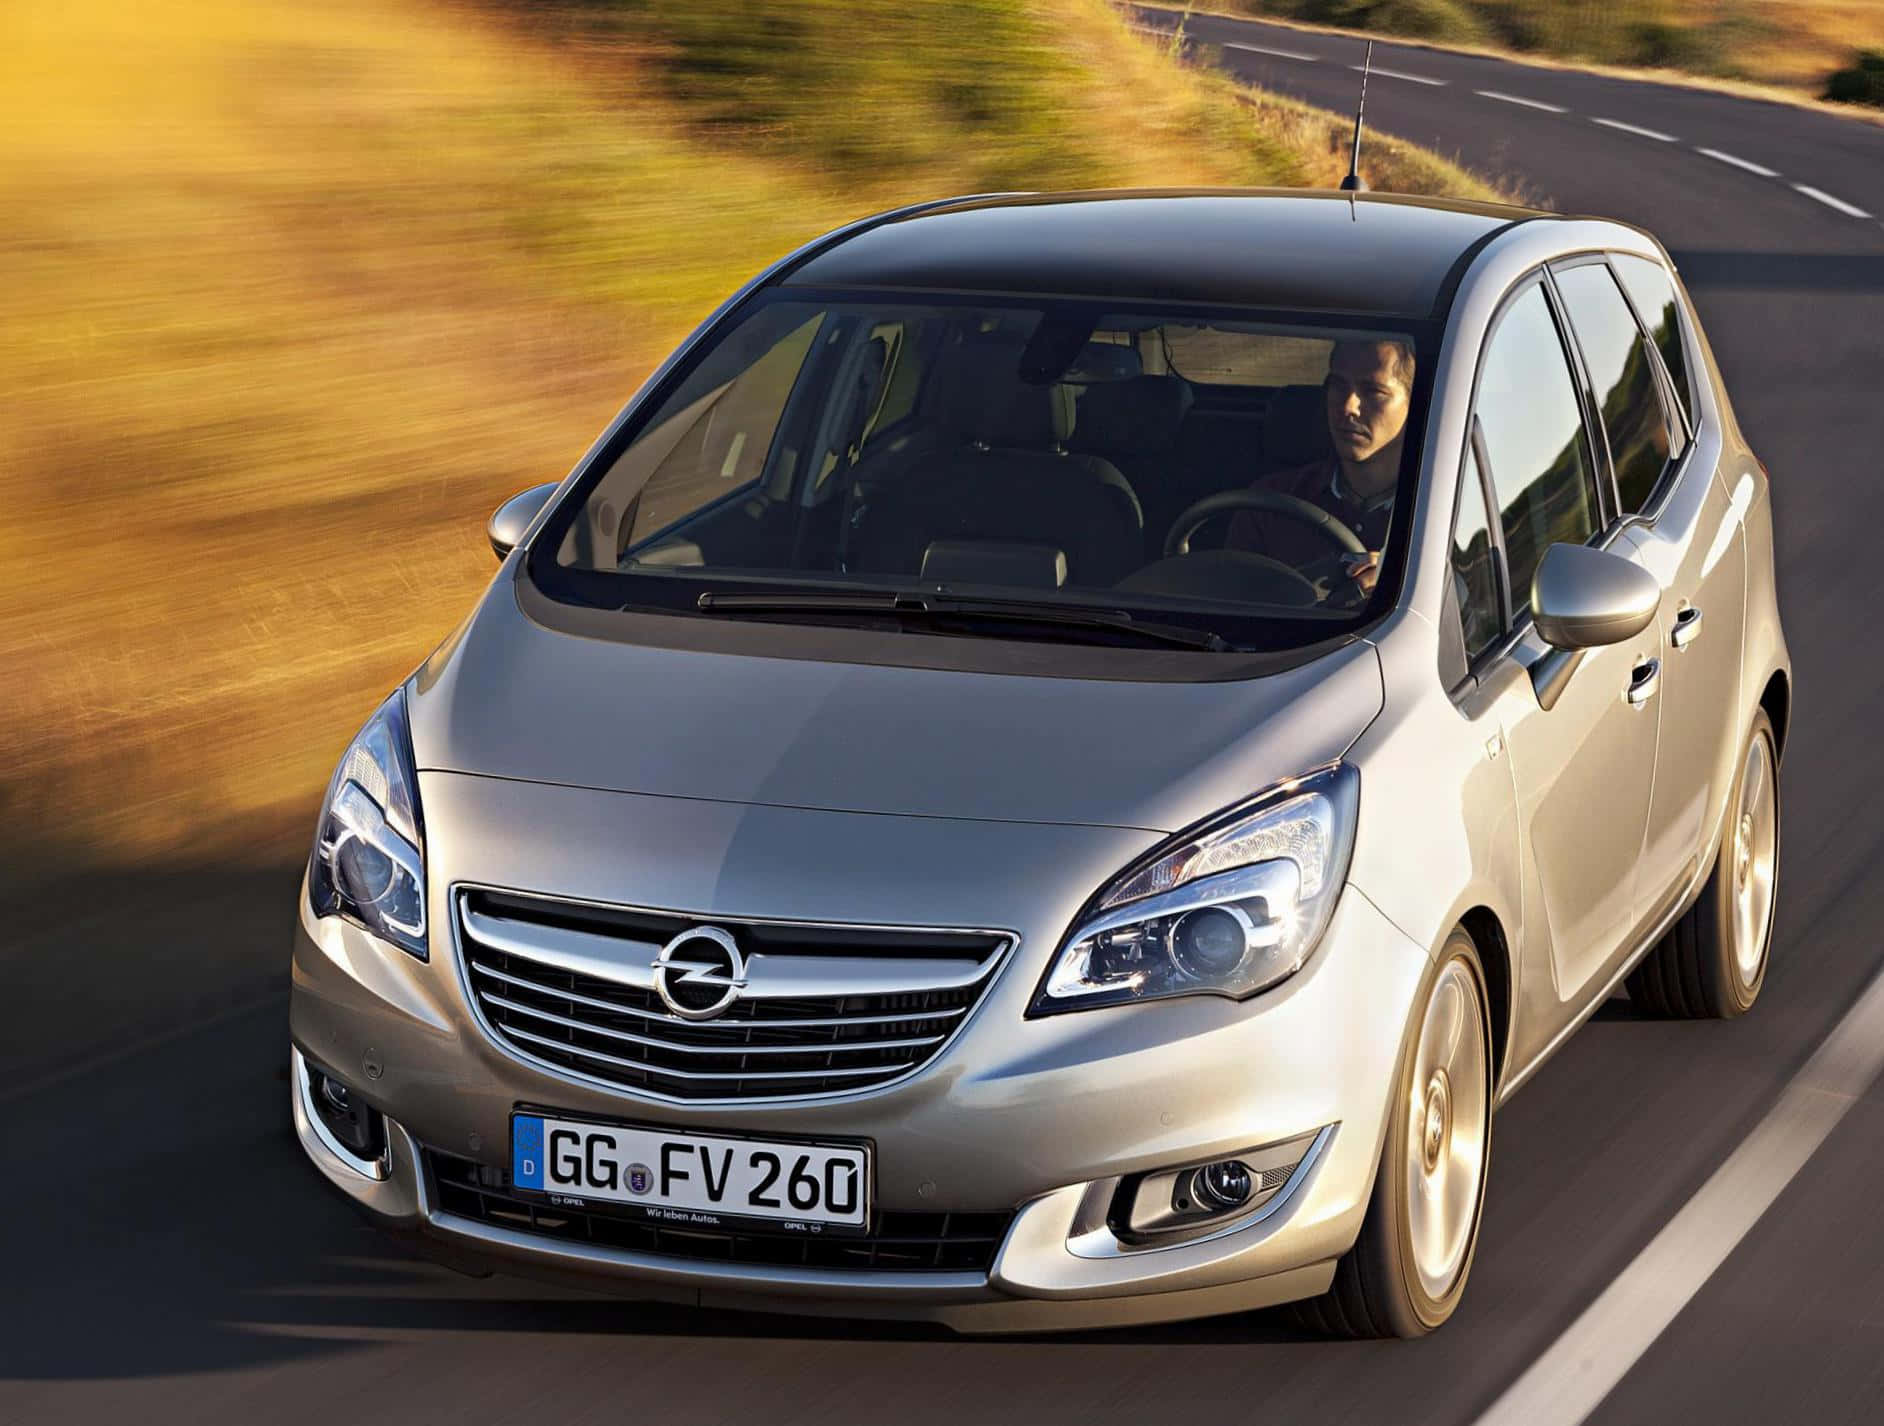 Opel Meriva Cruising Through The Dusk Wallpaper